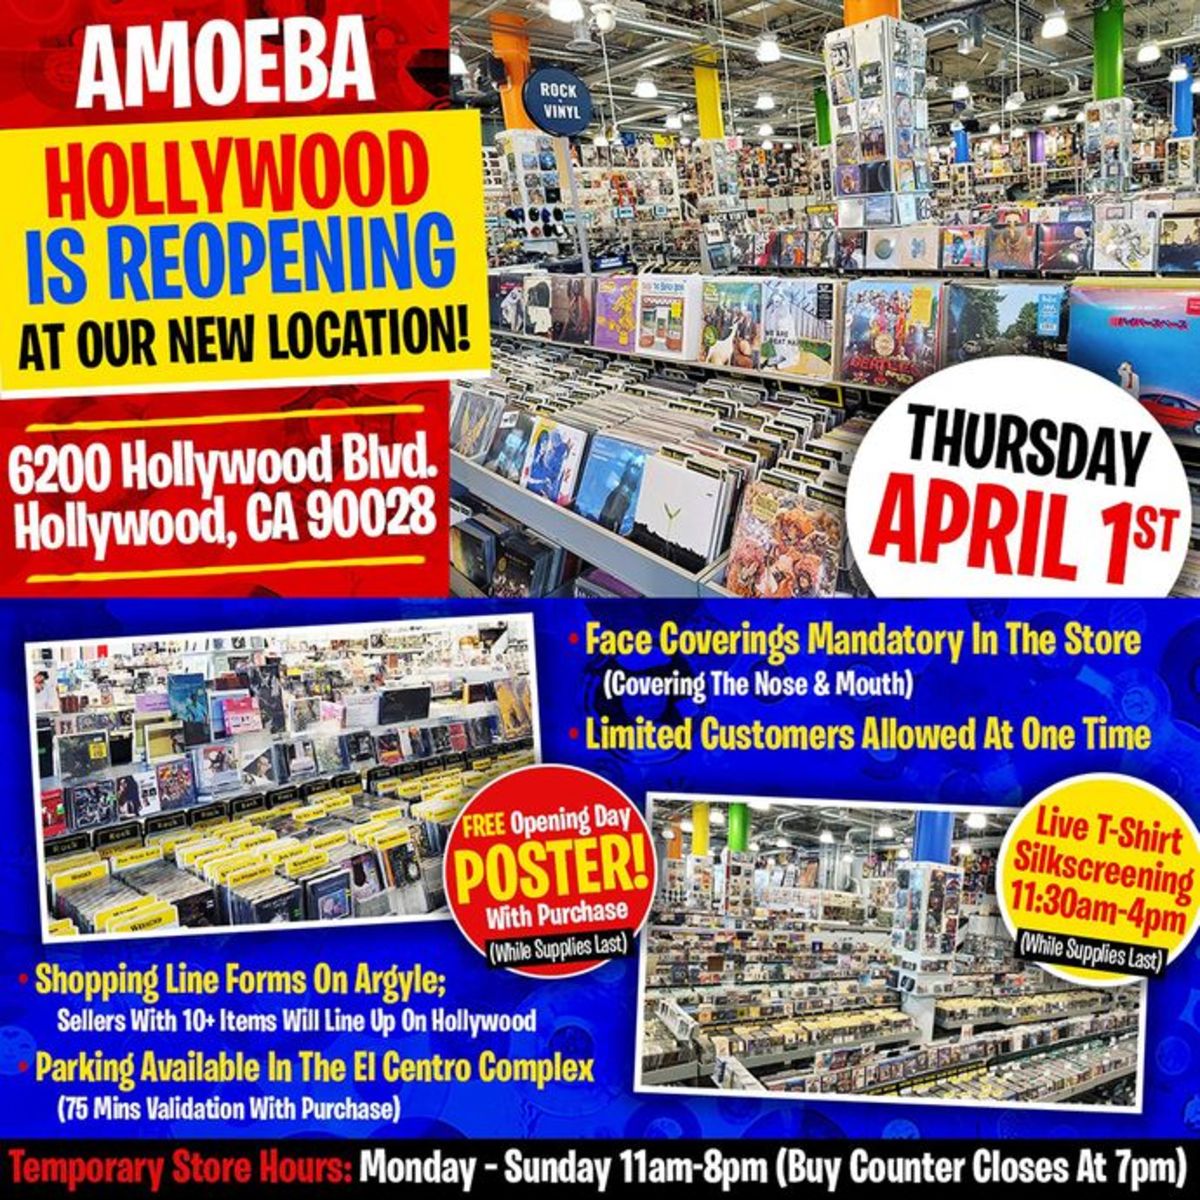 OUR FAVORITE NEW MUSIC & MOVIES! - Amoeba Music